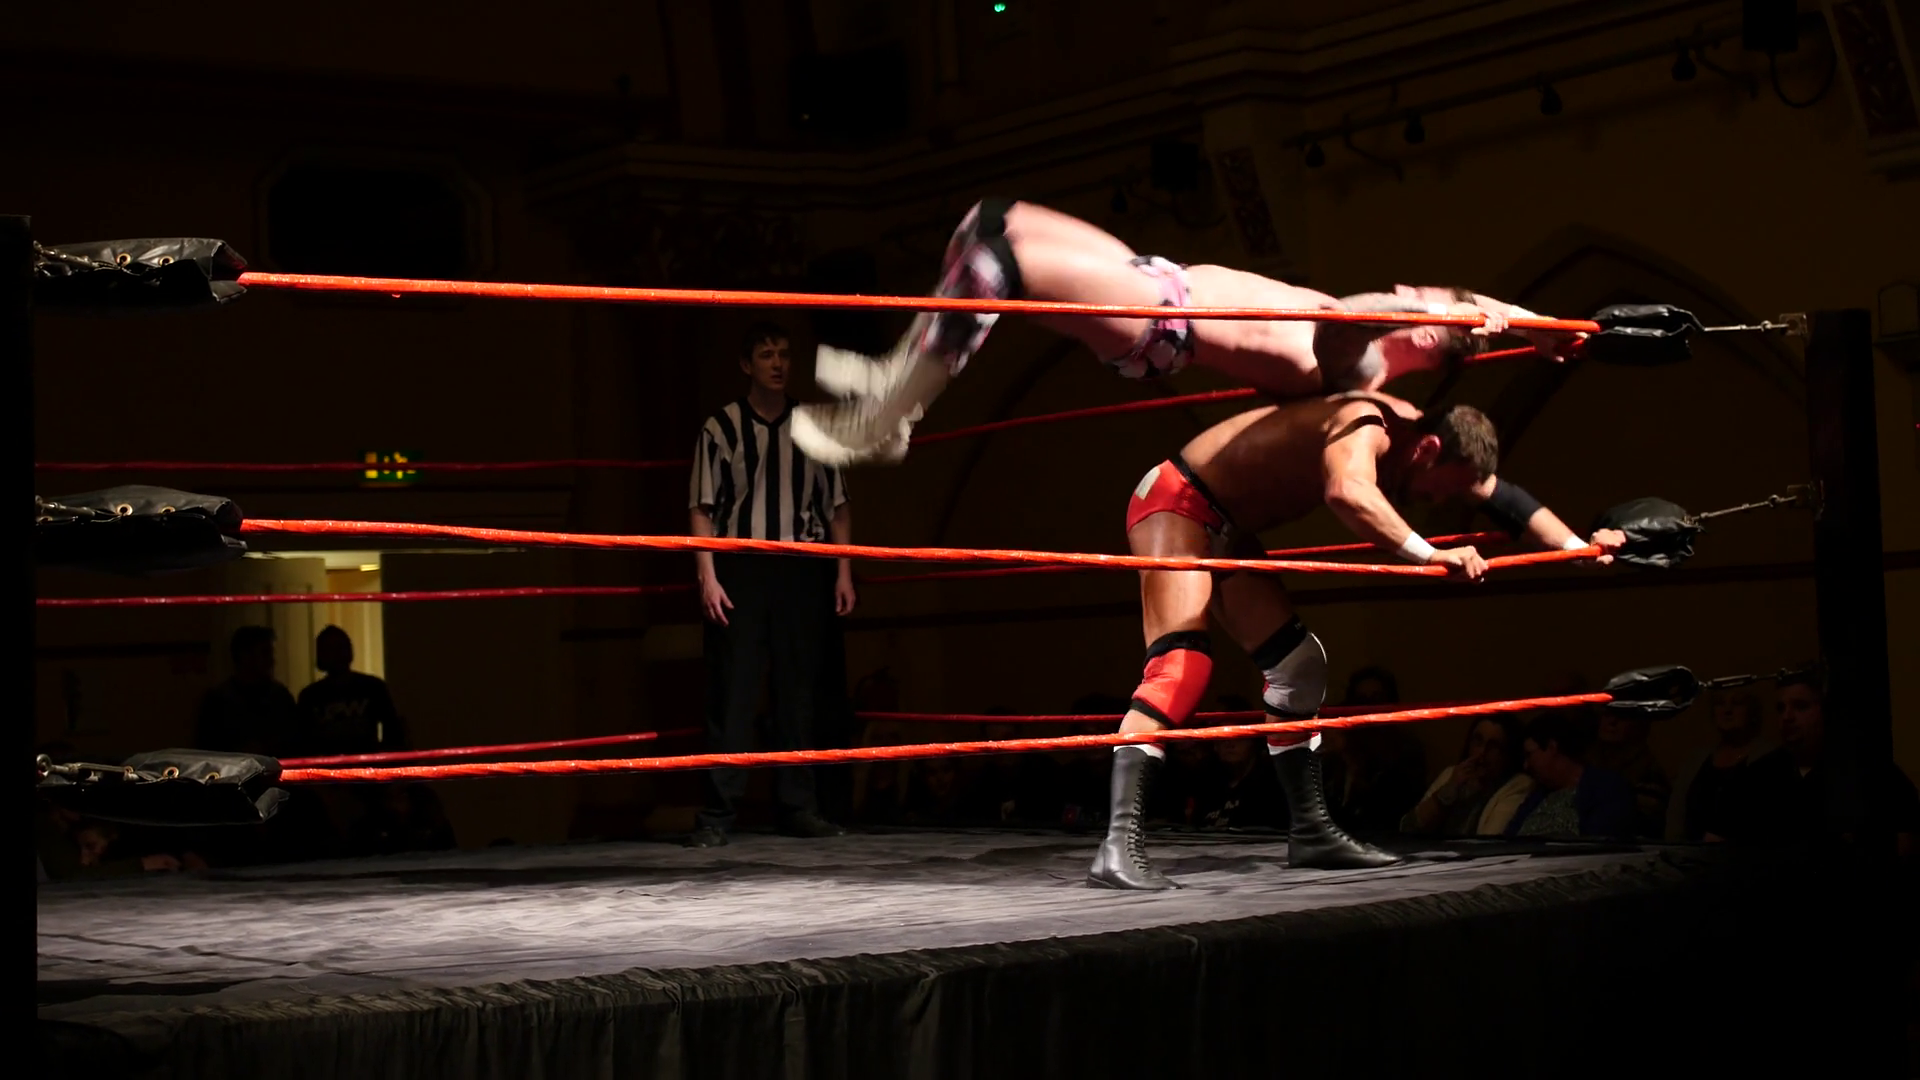 Wrestling match photo